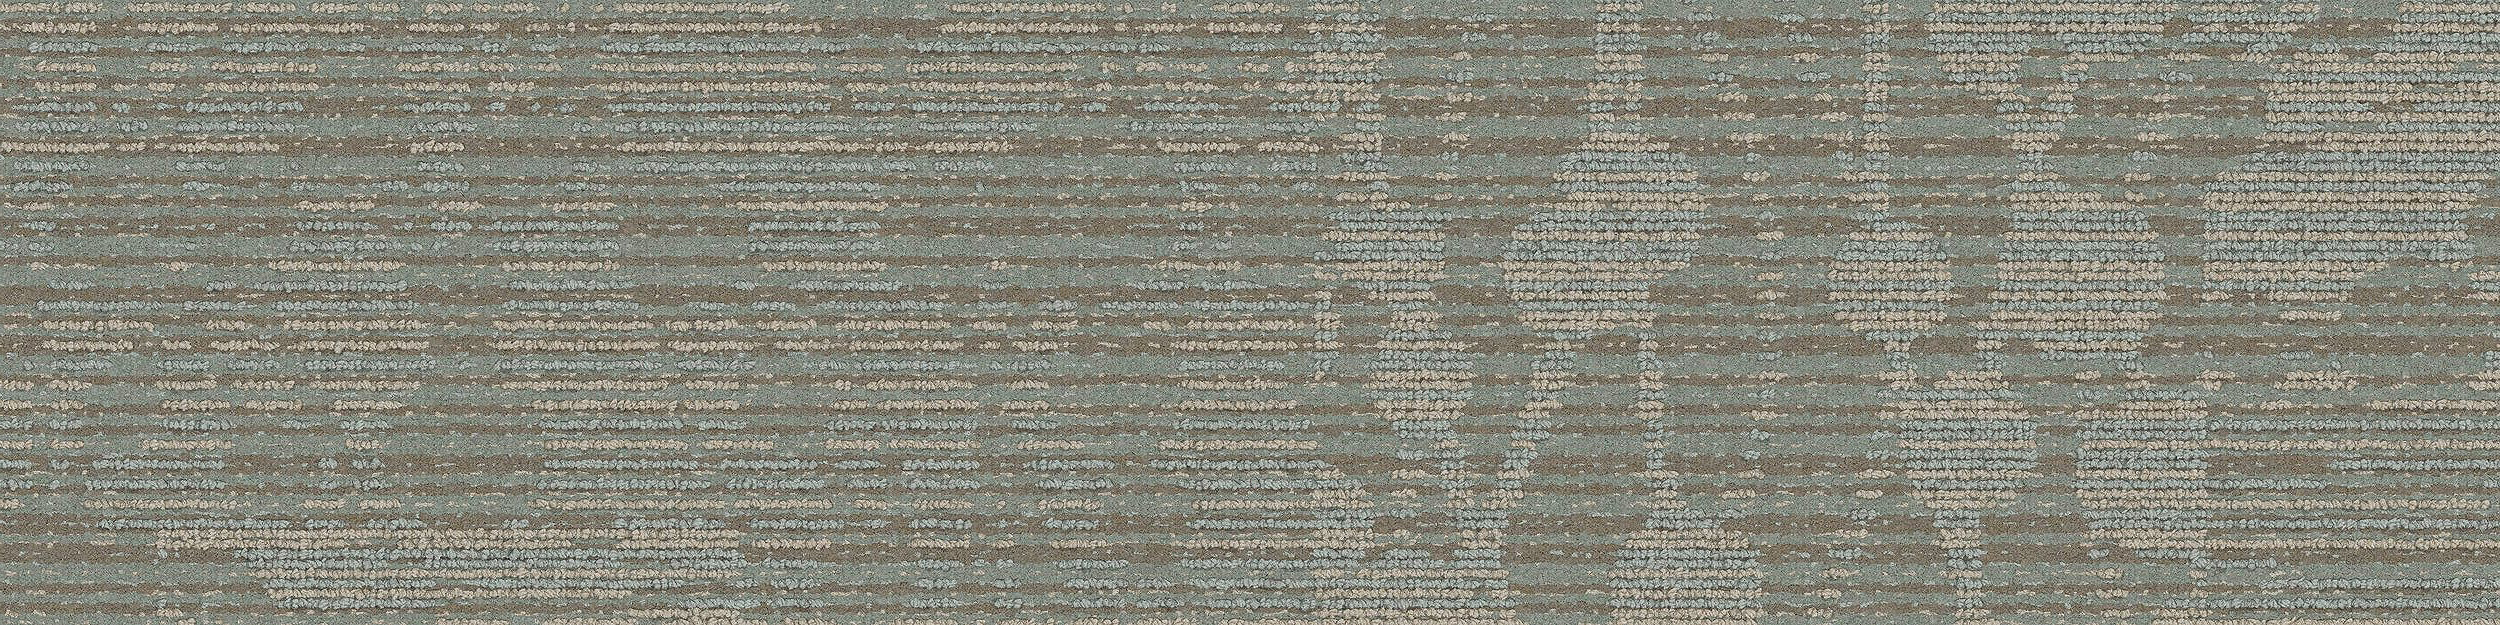 WE154 Carpet Tile In Patina imagen número 4